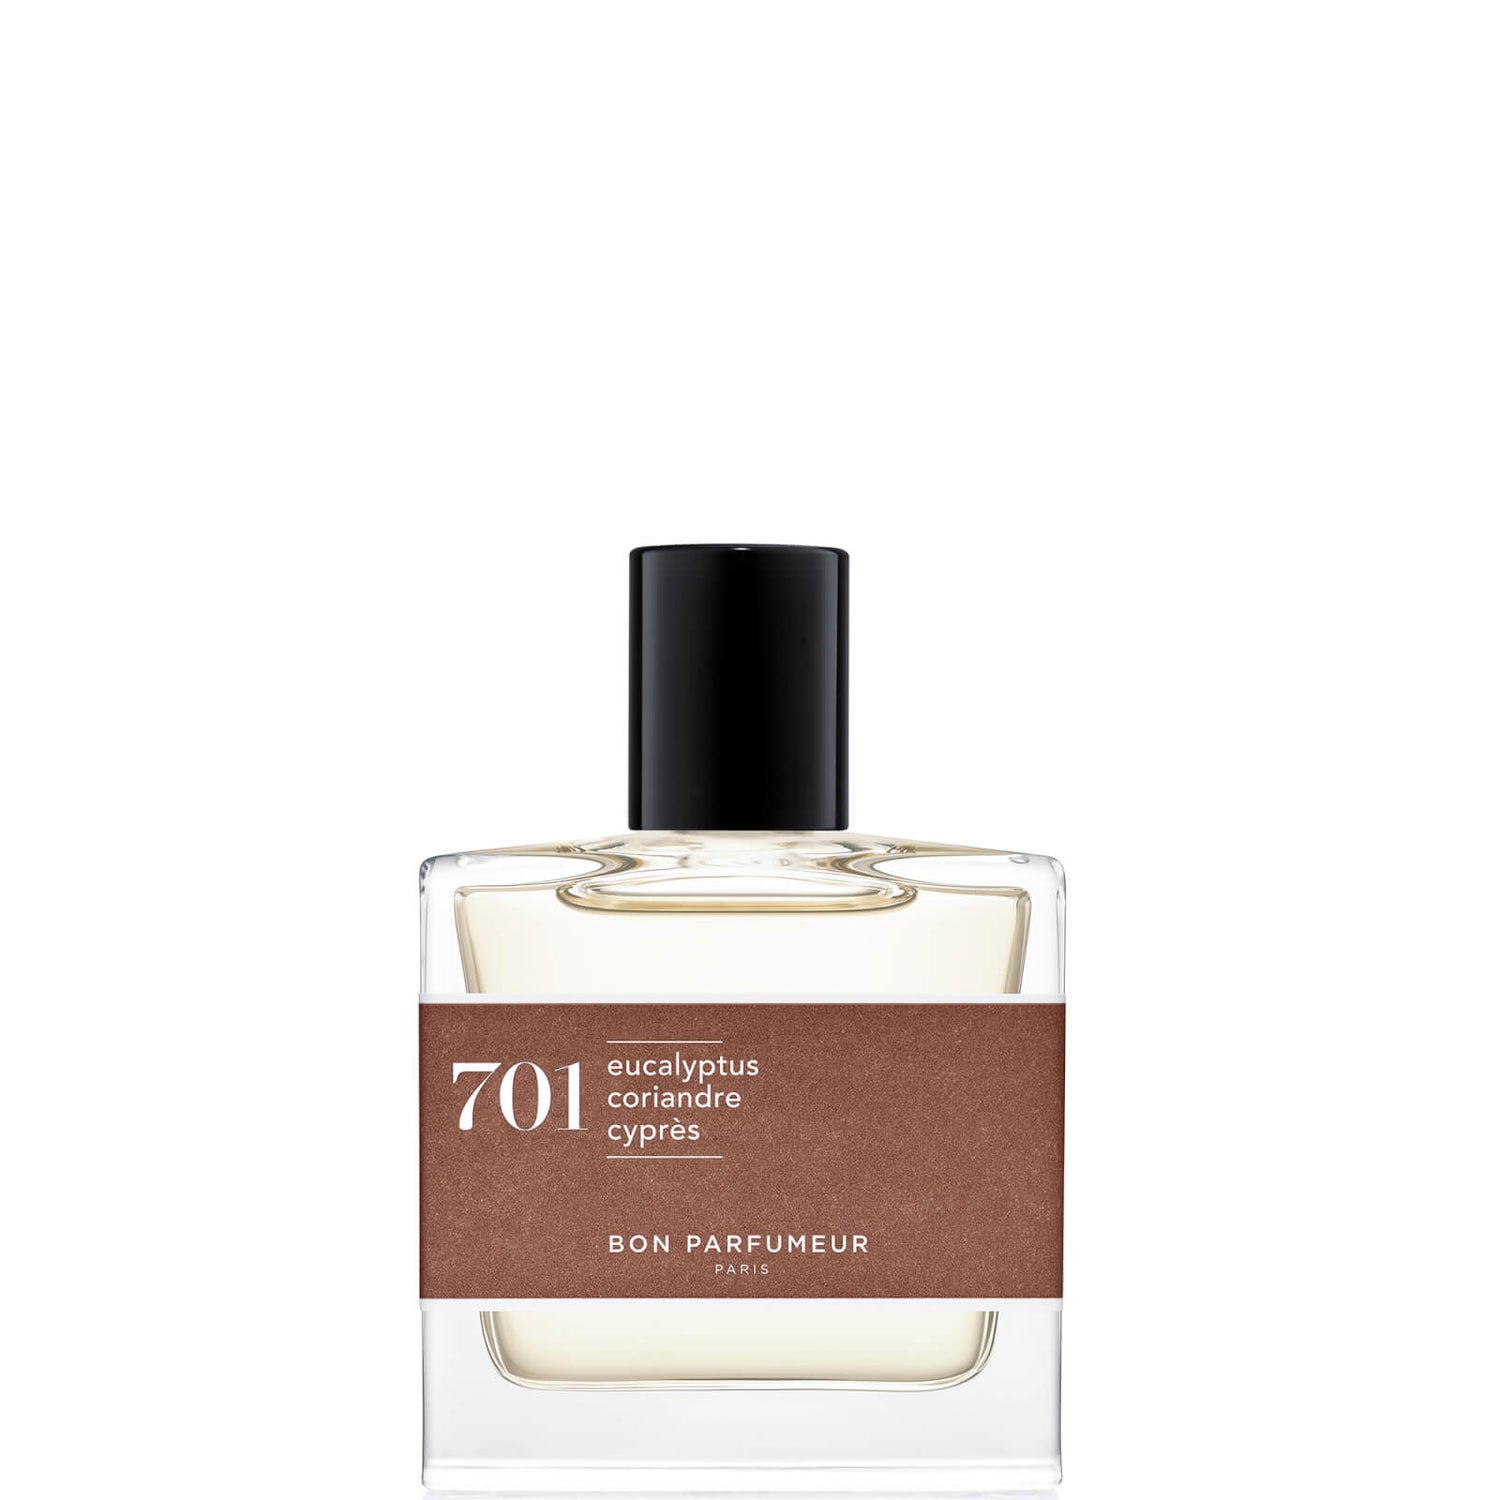 Bon Parfumeur 701 Eucaliptus Coriandru chiparos Apă de parfum - 30ml